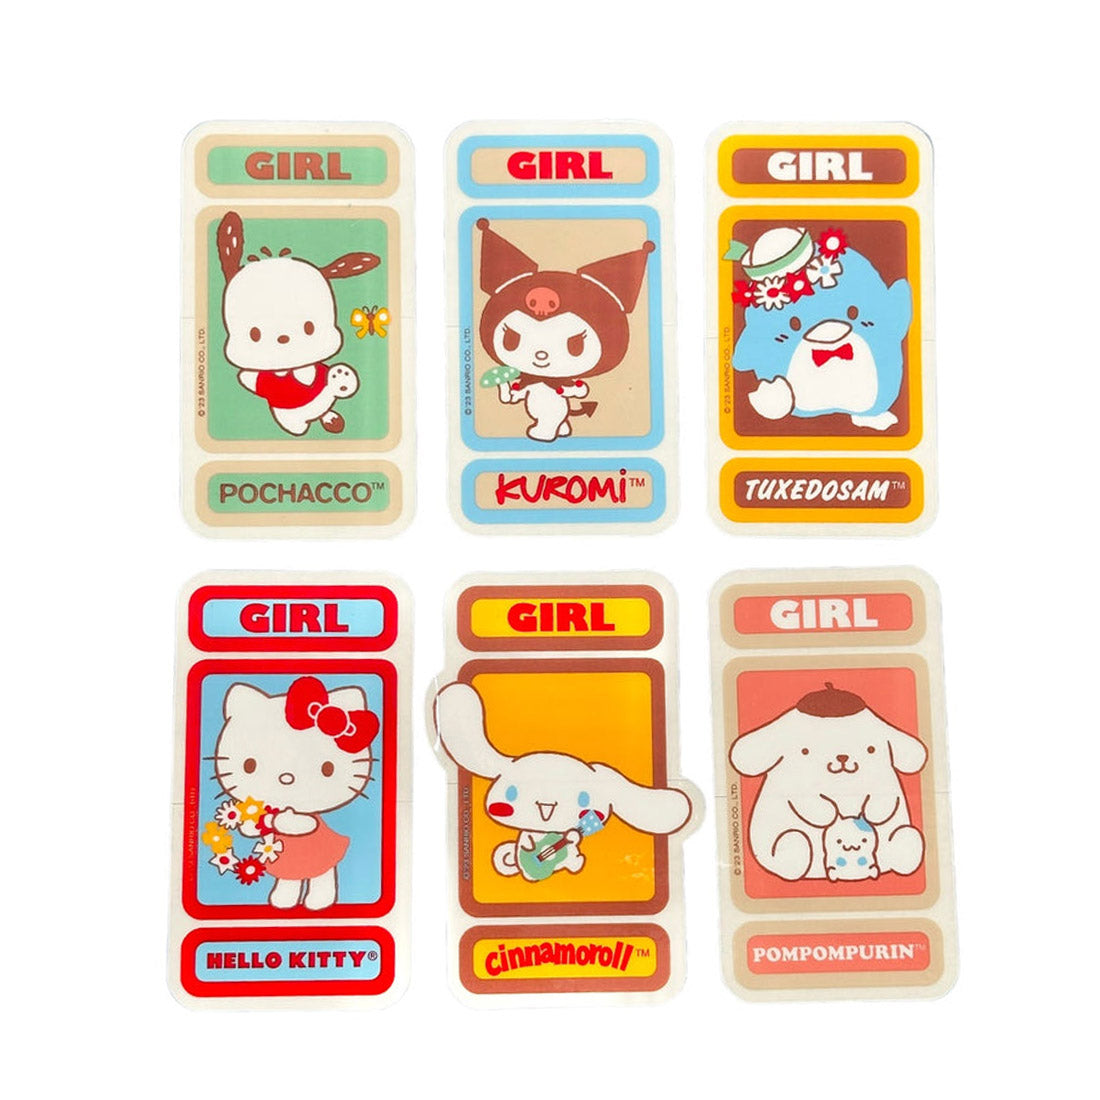 Girl x Sanrio Hello Kitty Friends Sticker Pack 6pk Stickers